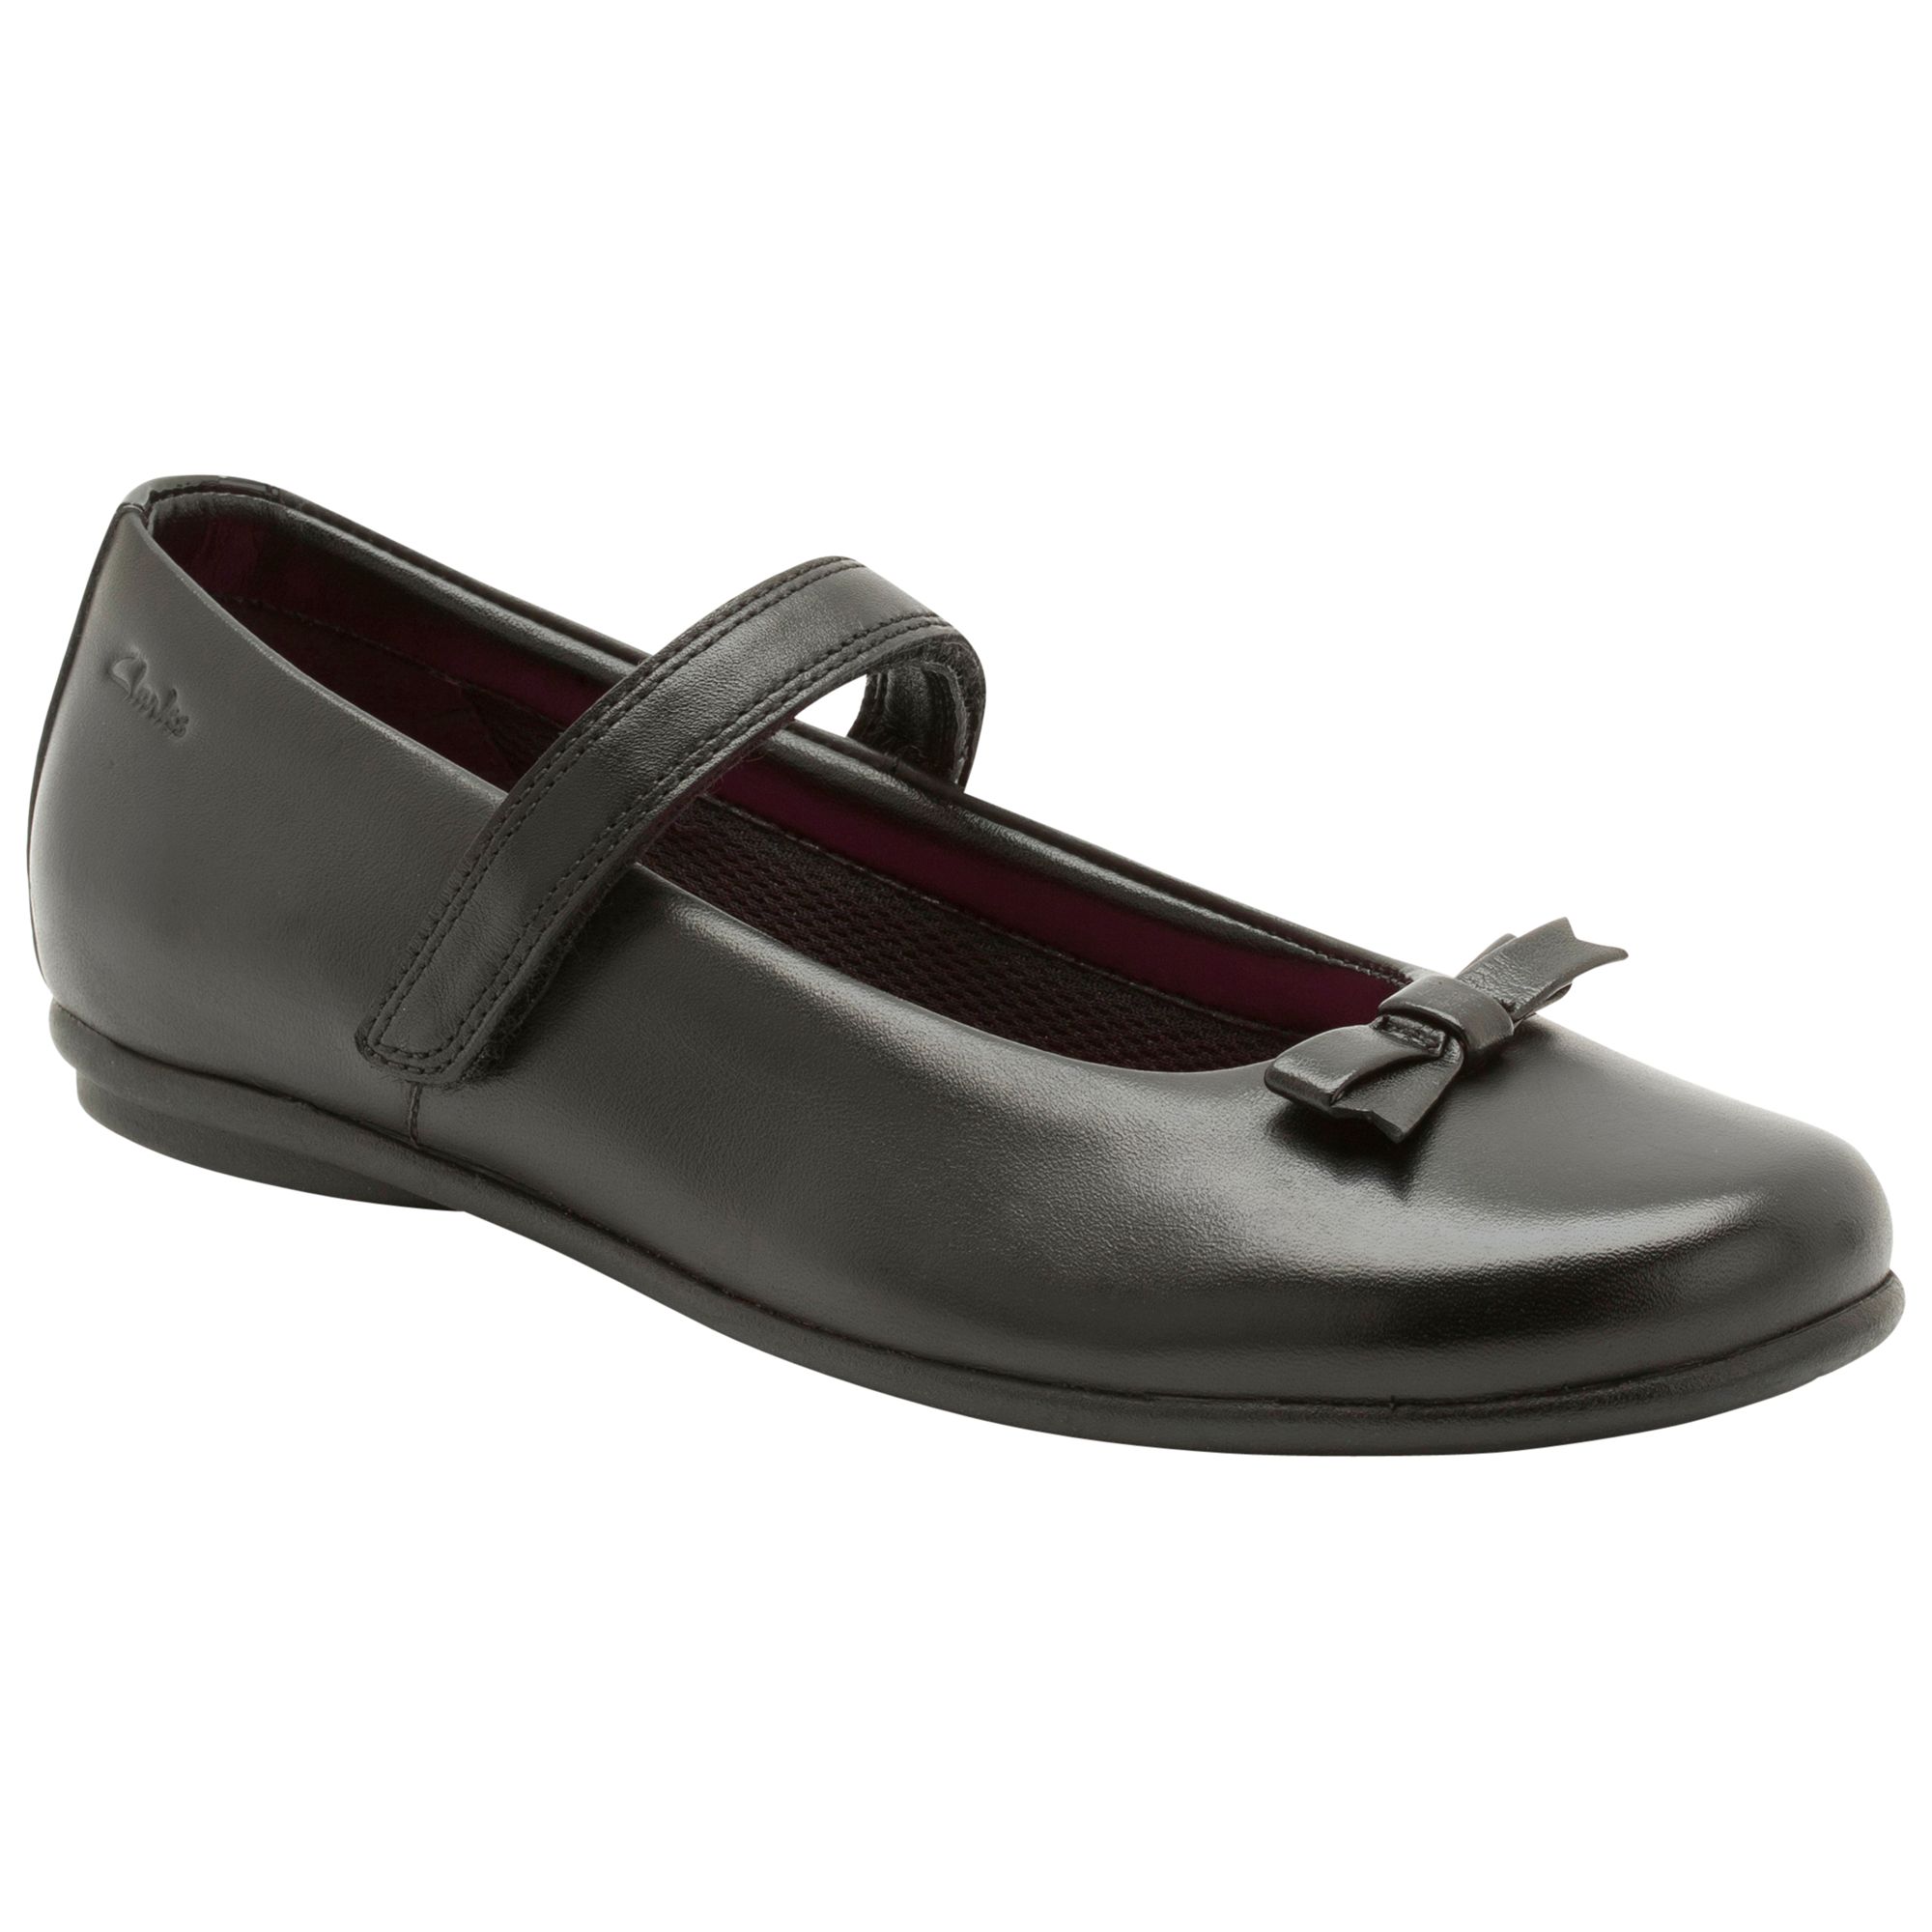 Clarks Daisy Meadow Shoes, Black